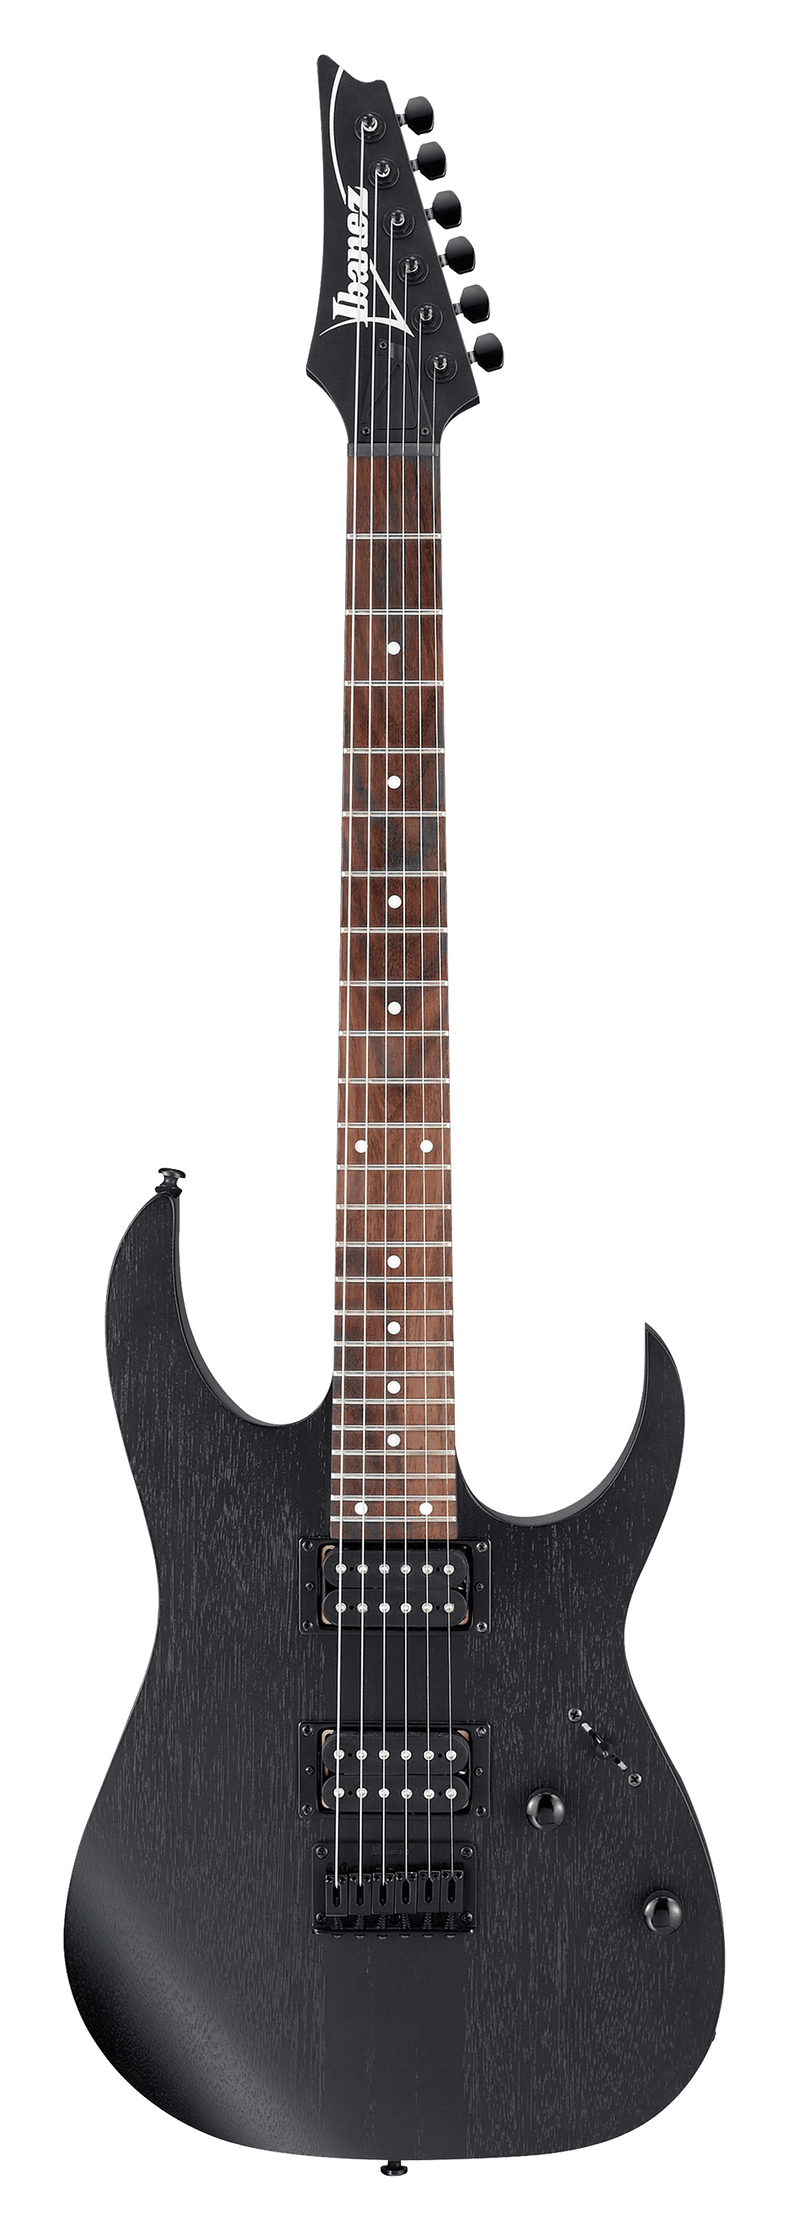 Ibanez RGRT421WK Electric Guitar (Weathered Black)